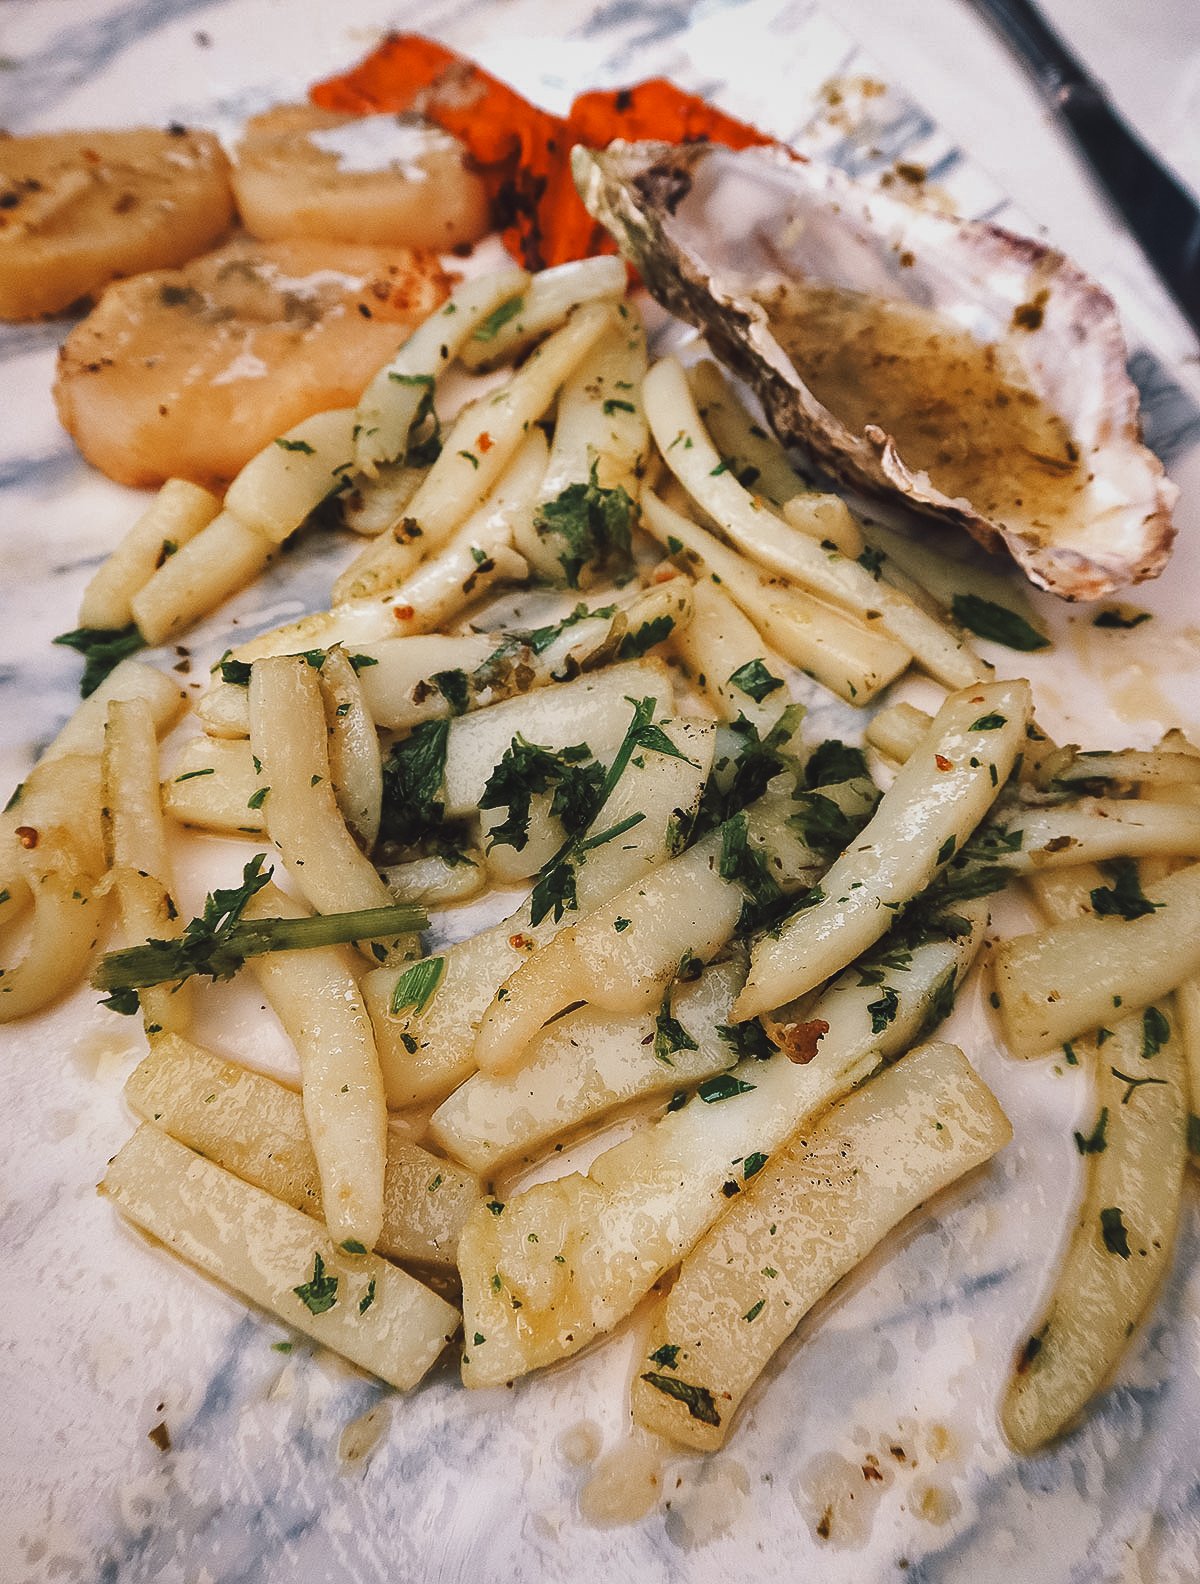 Grilled squid at a restaurant in Casablanca